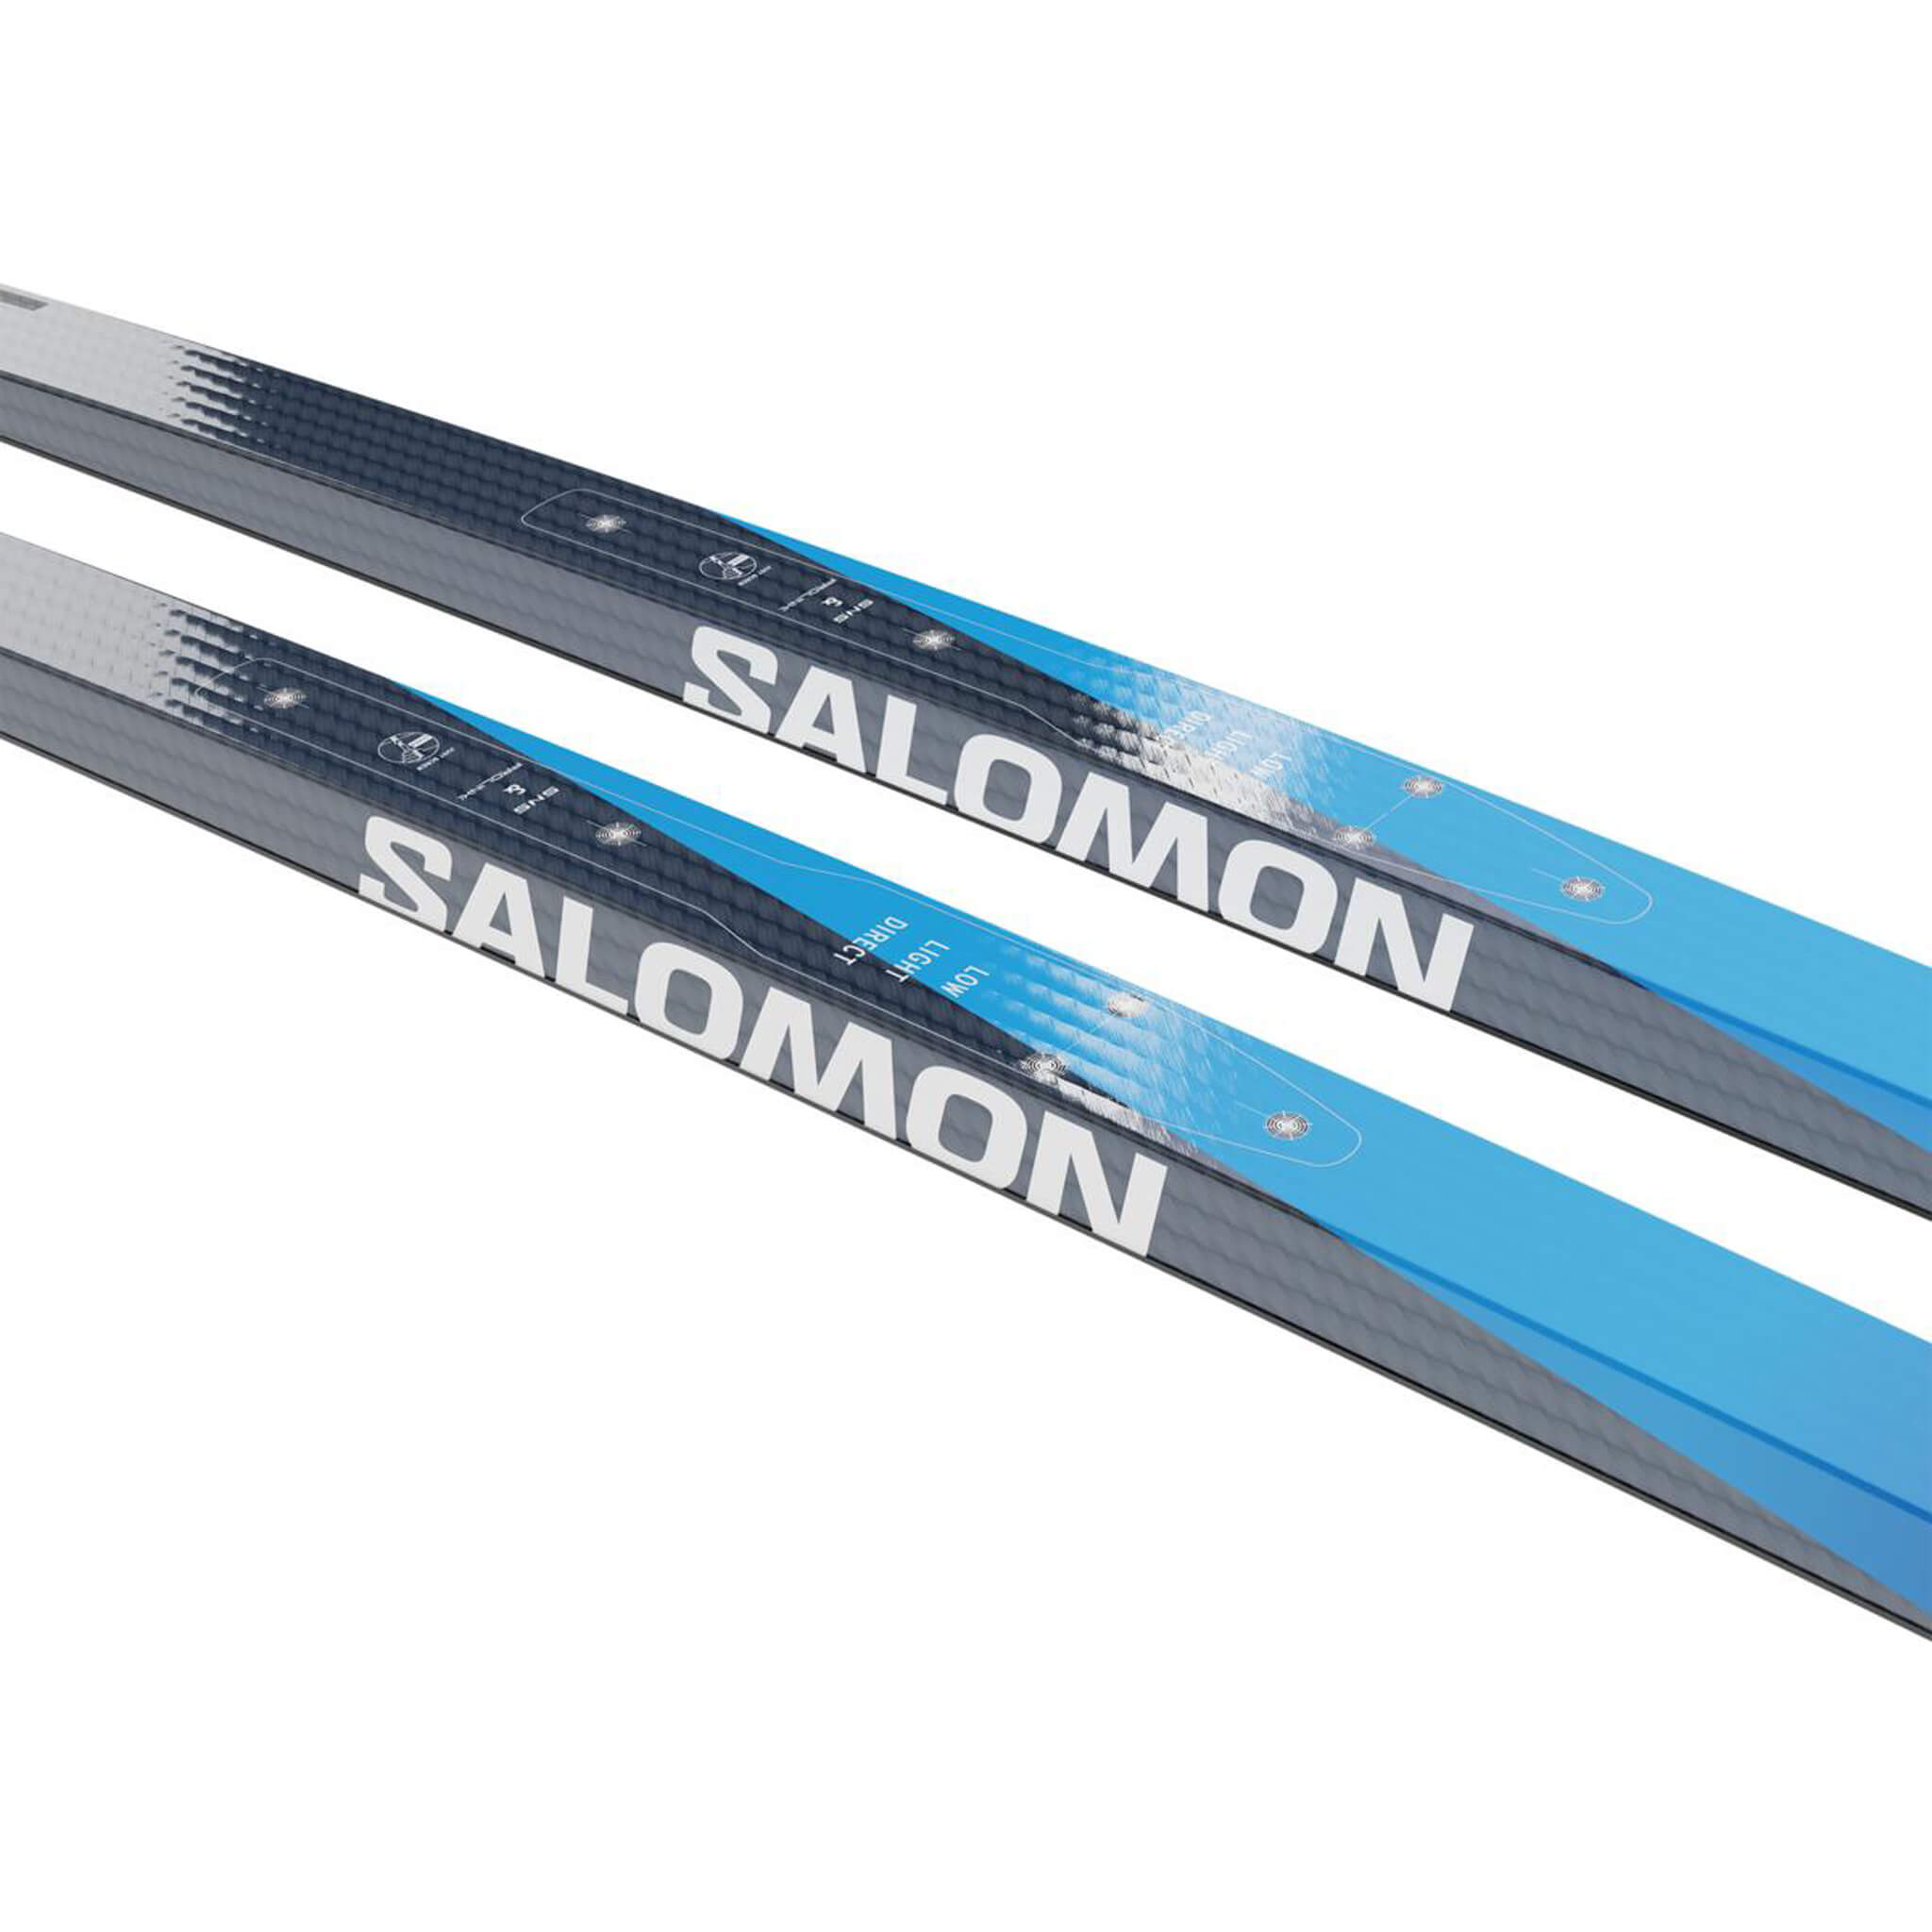 Salomon S/lab Carbon Skate Ski 192 Extra Stiff Universal